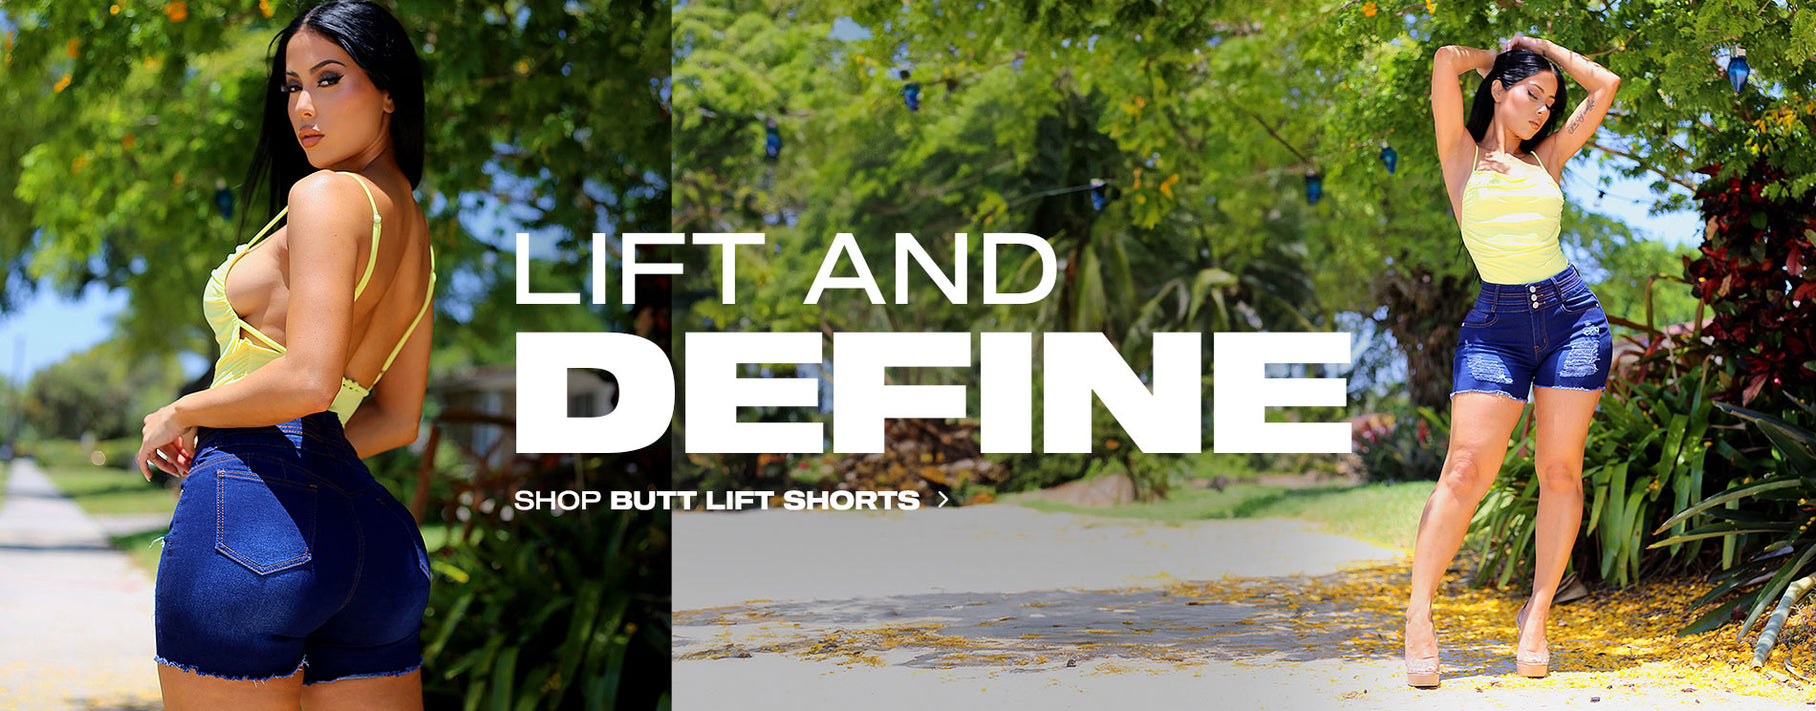 Lift & Define: Shop Butt Lift Shorts